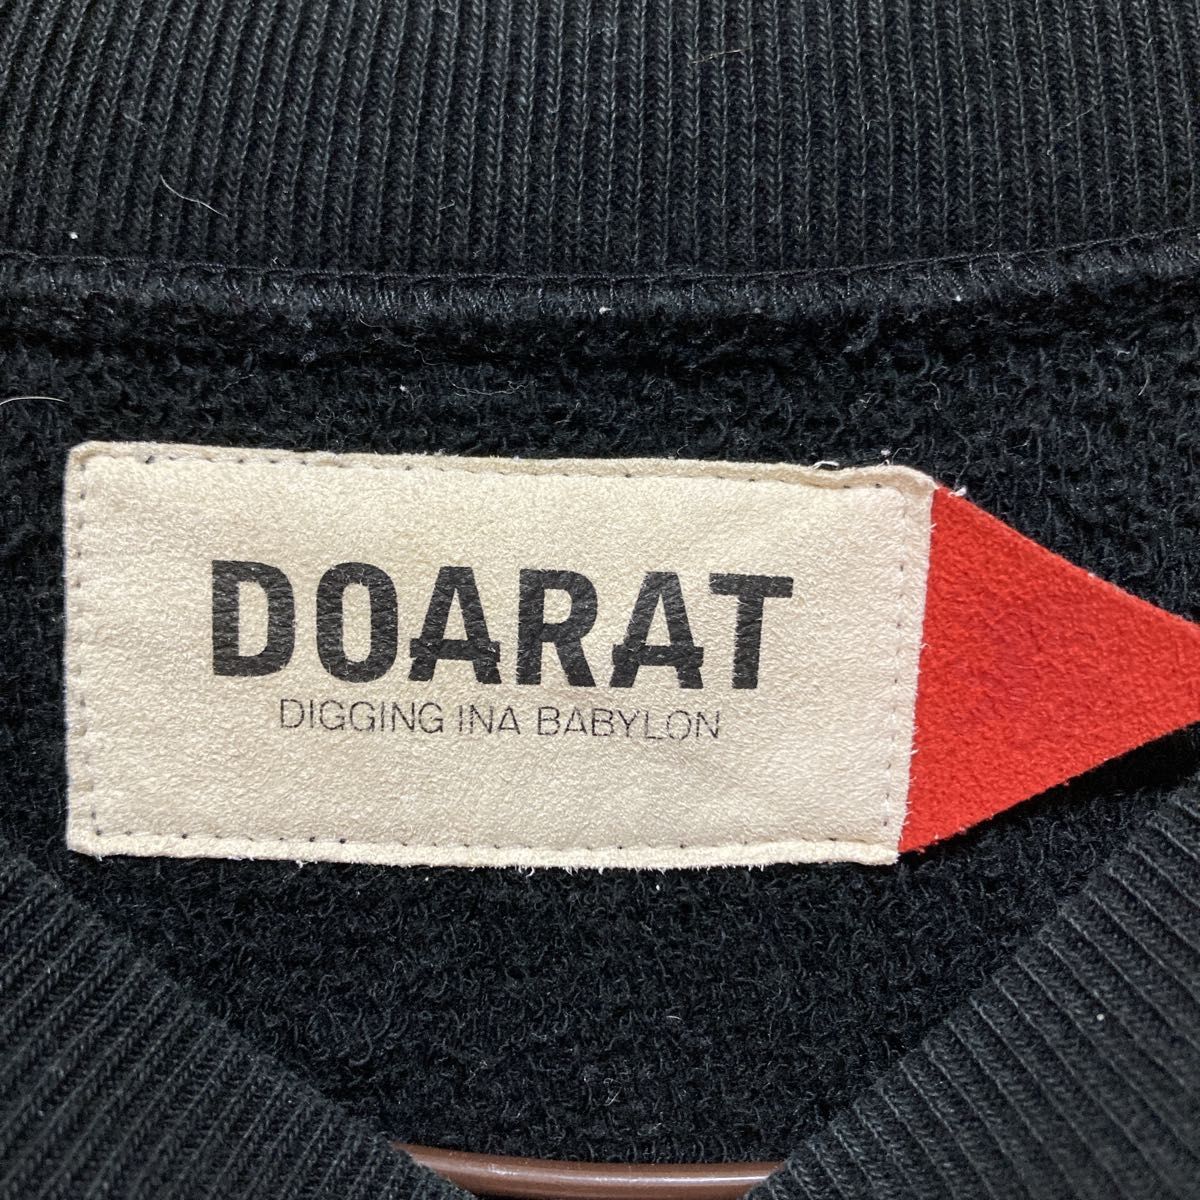 DOARAT/ドゥアラット　スエットトレーナー